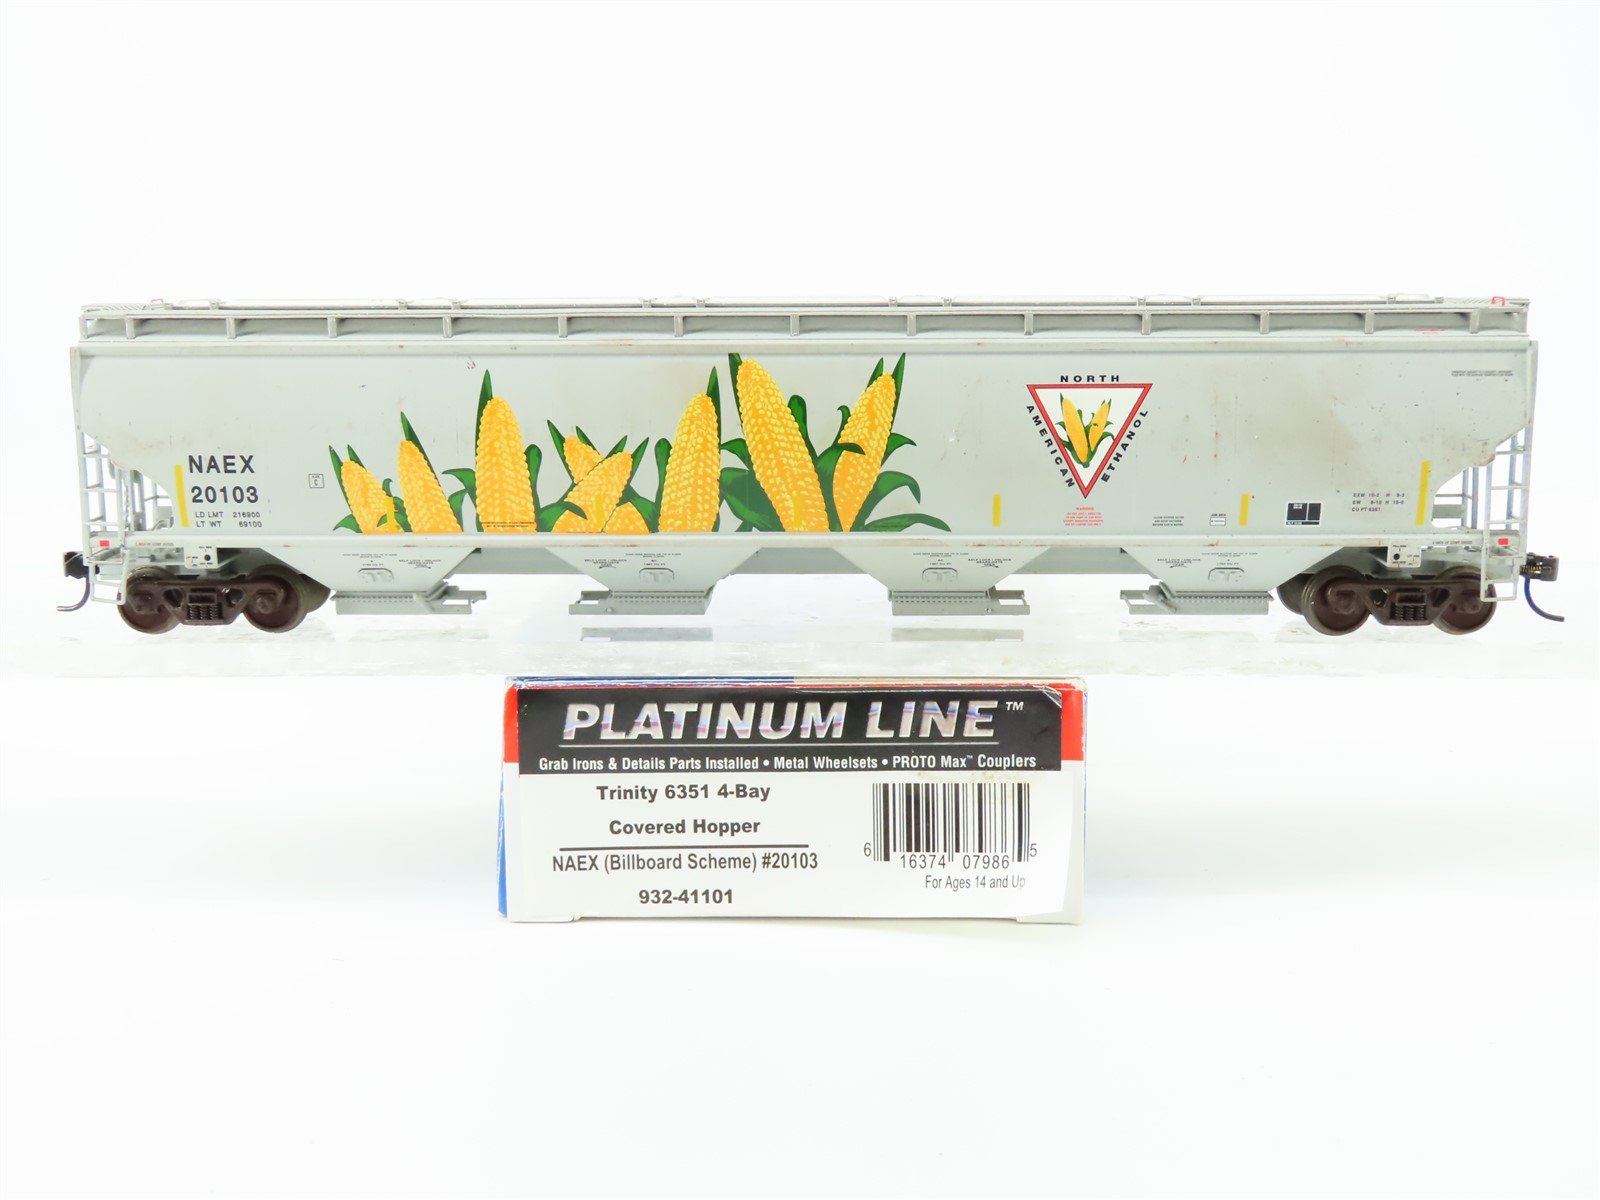 HO Walthers Platinum Line 932-41101 NAEX North American Ethanol Hopper #20103